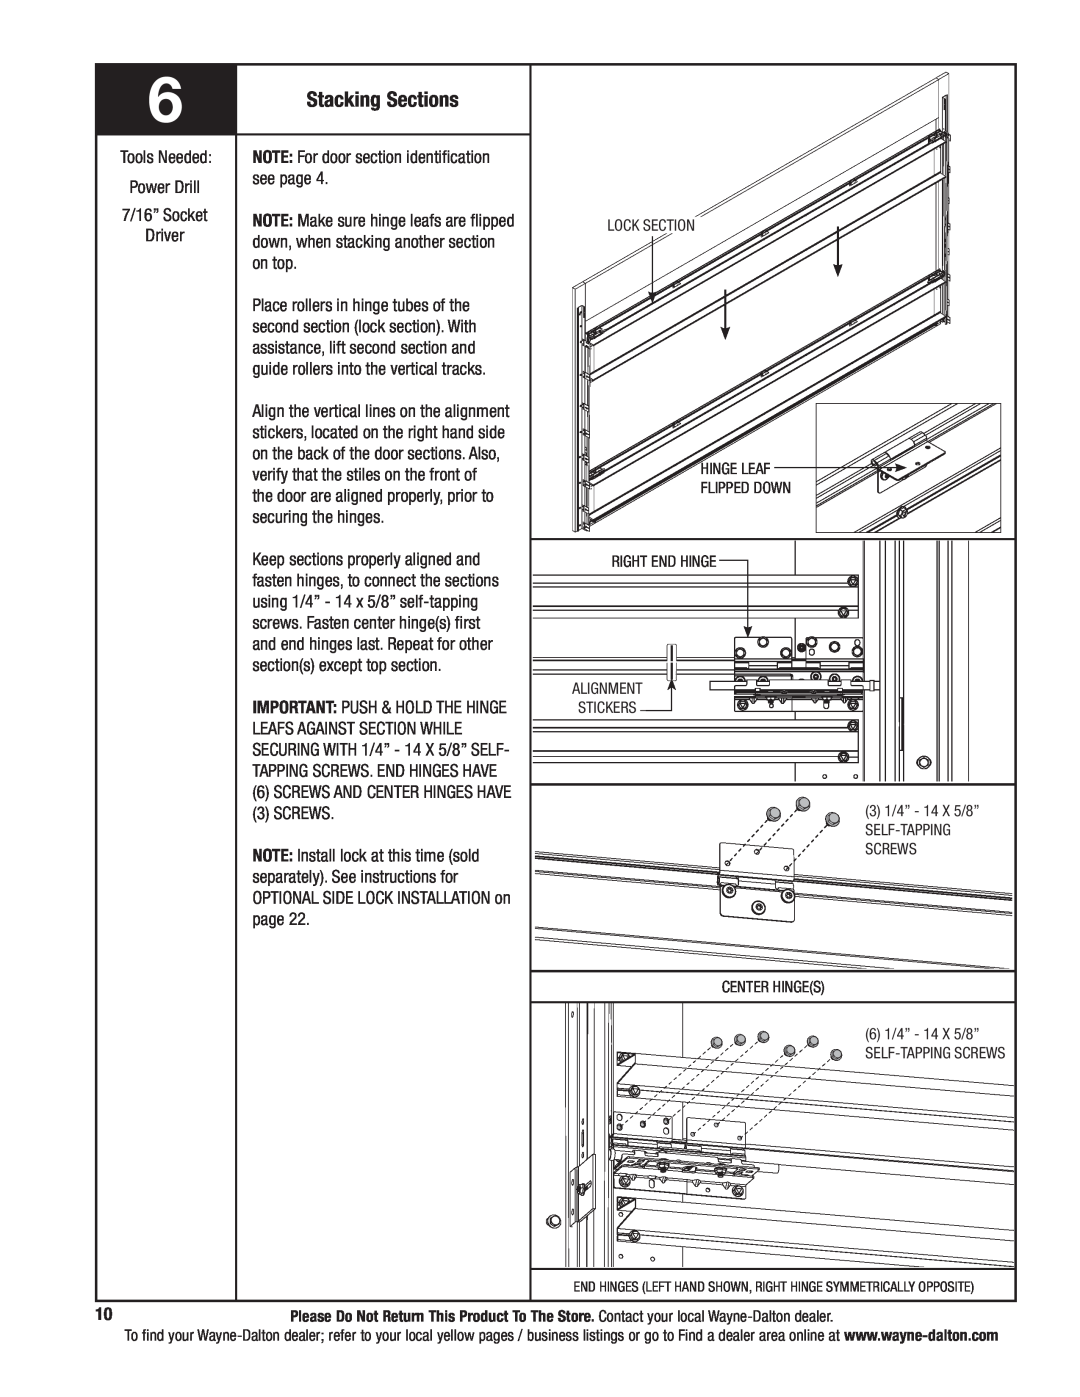 Wayne-Dalton 9800 installation instructions Stacking Sections 